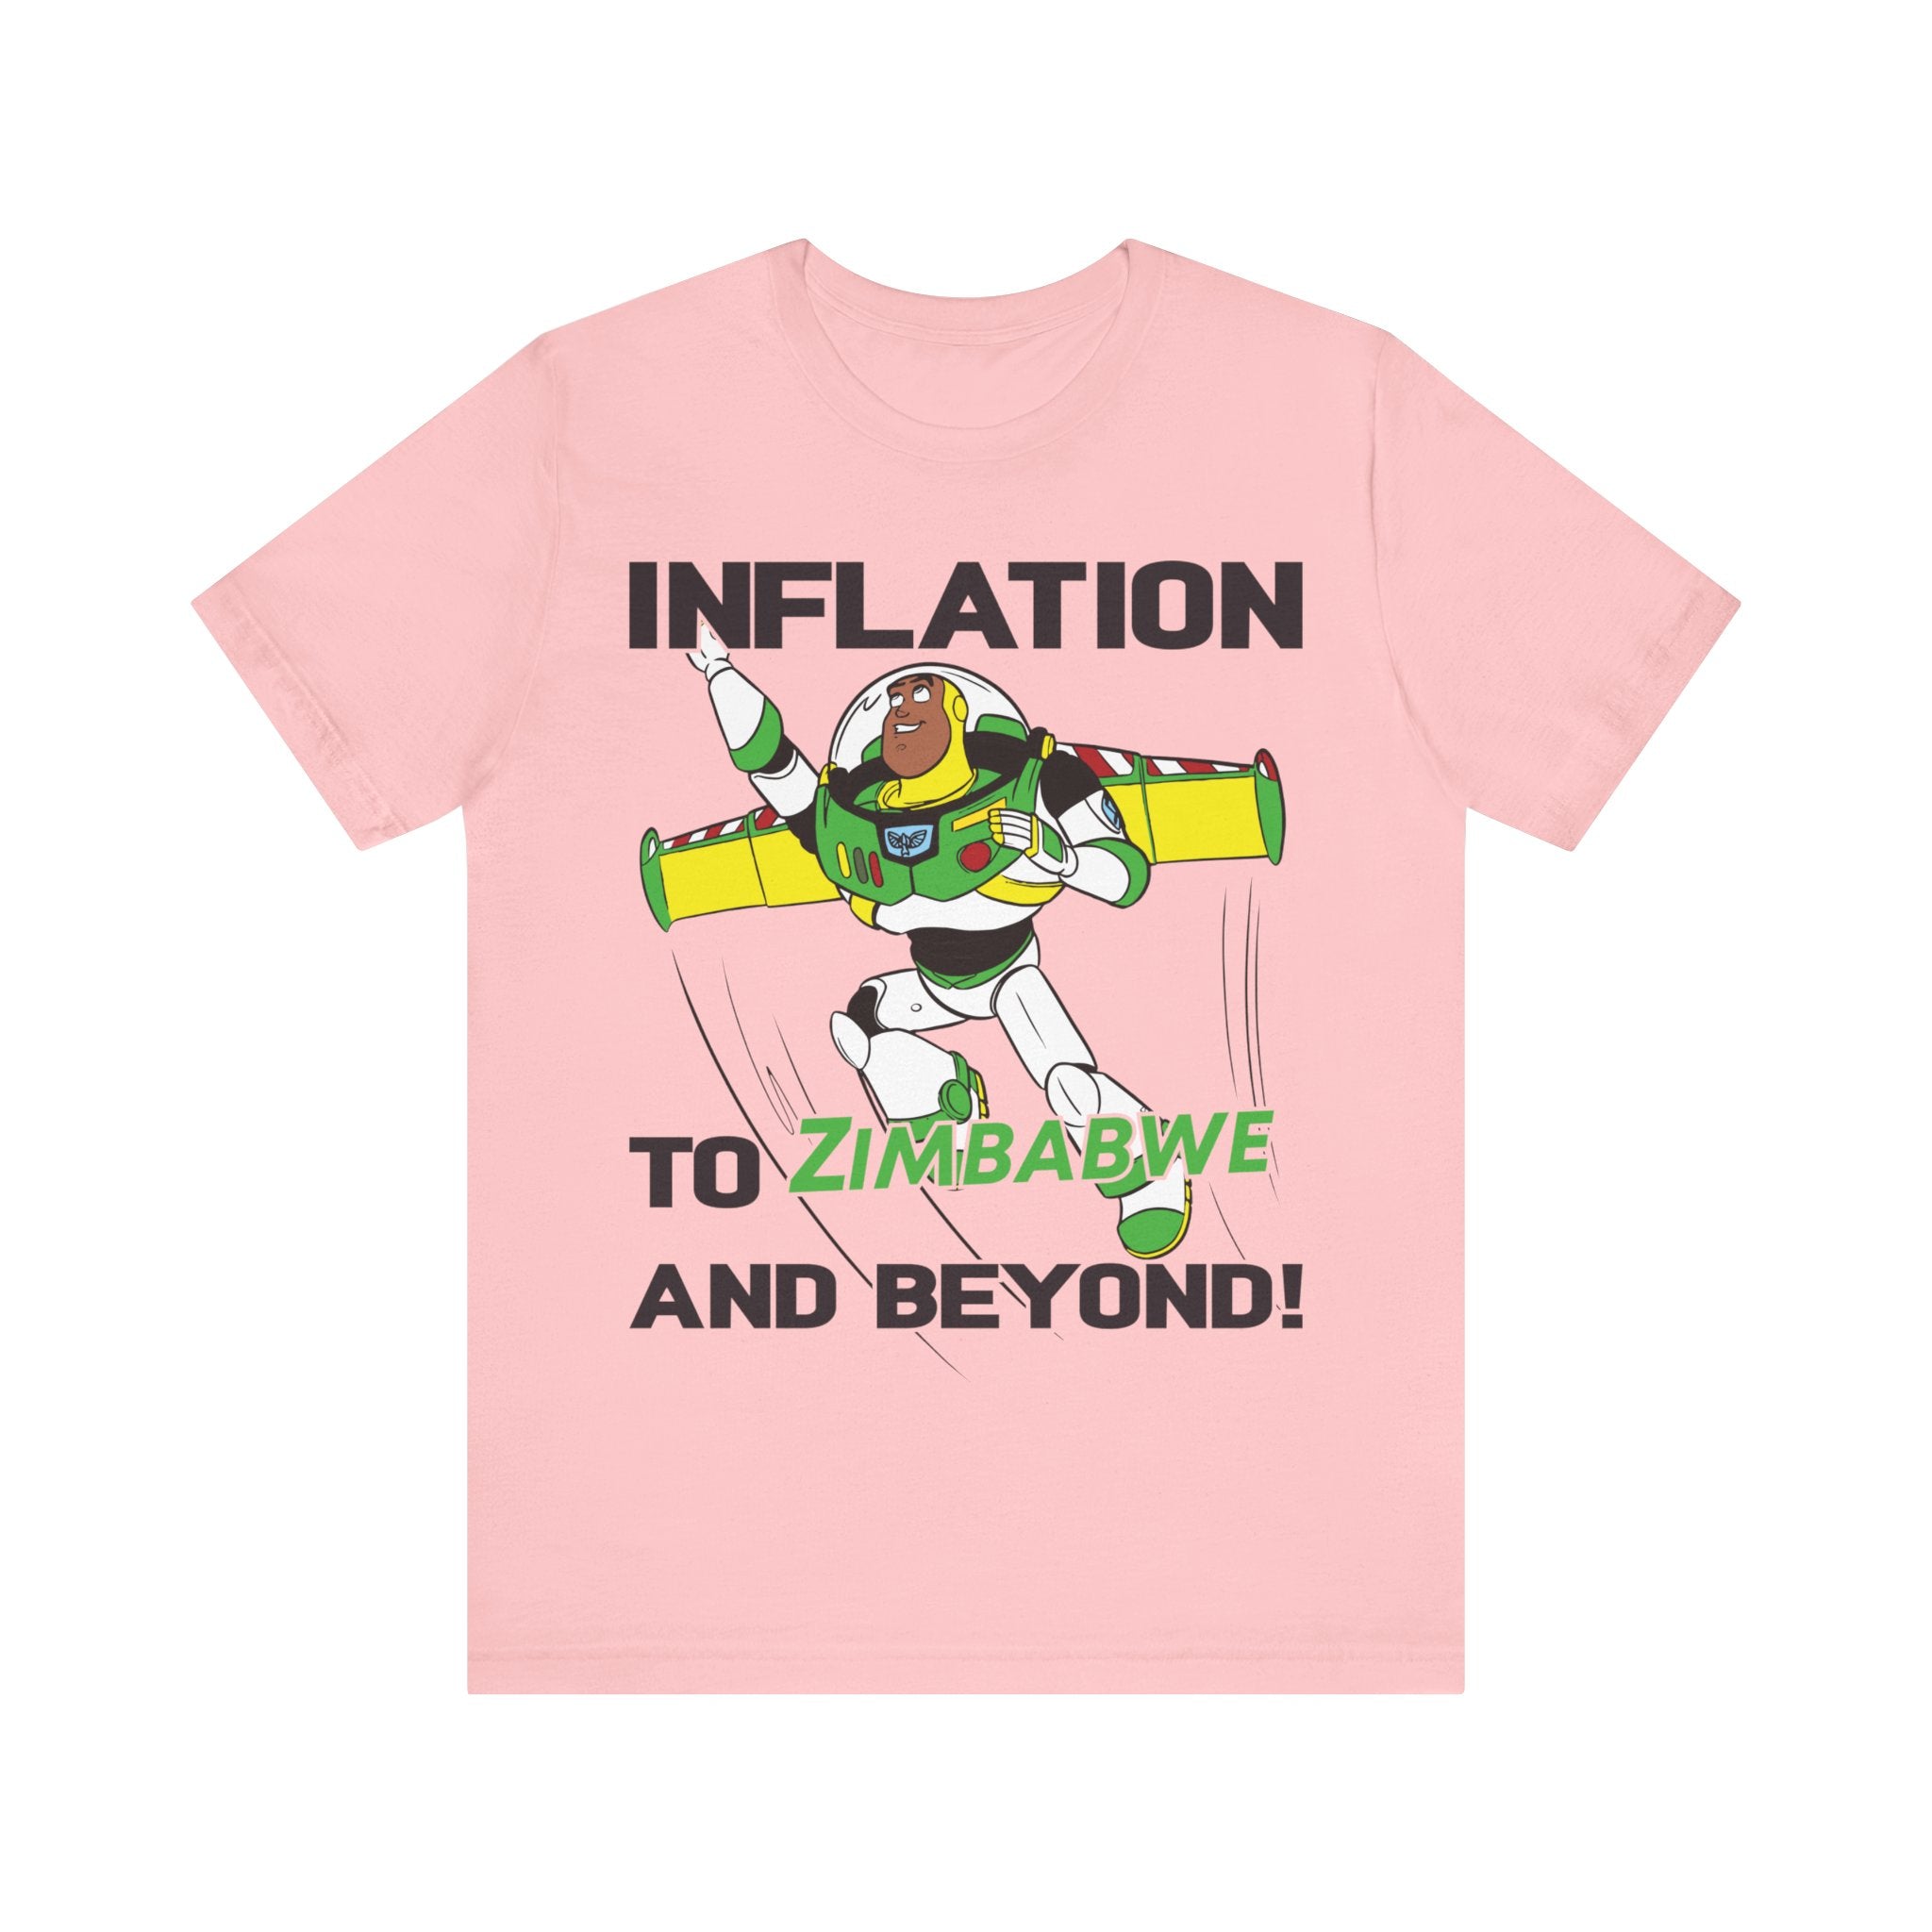 Inflation - To Zimbabwe and Beyond